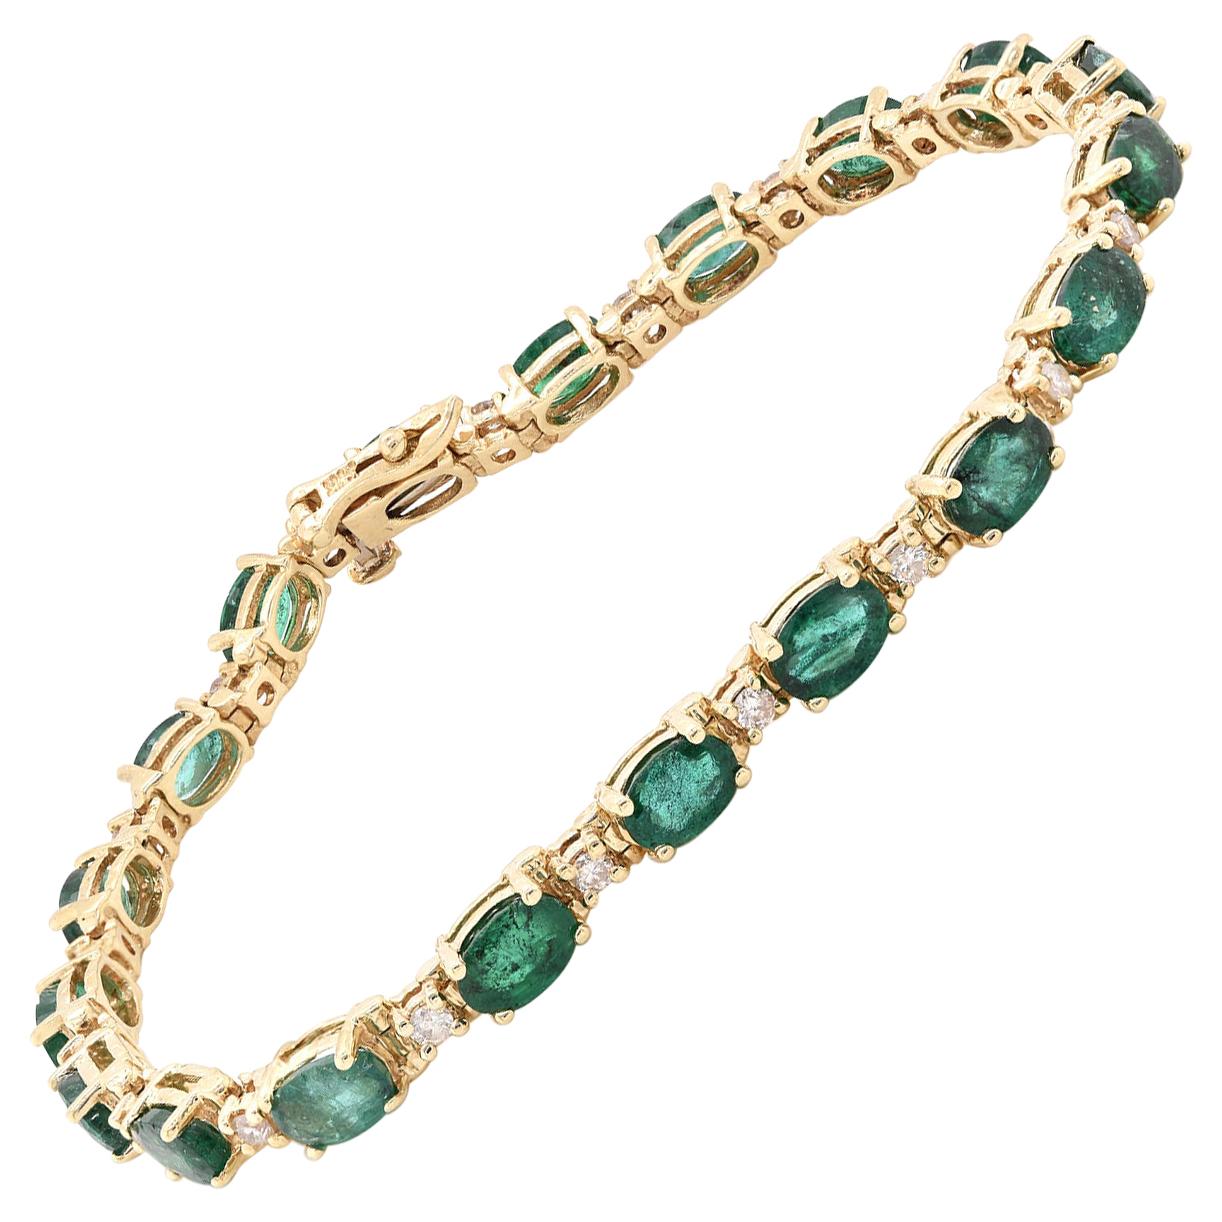 14 Karat Yellow Gold Emerald and Diamond Tennis Bracelet